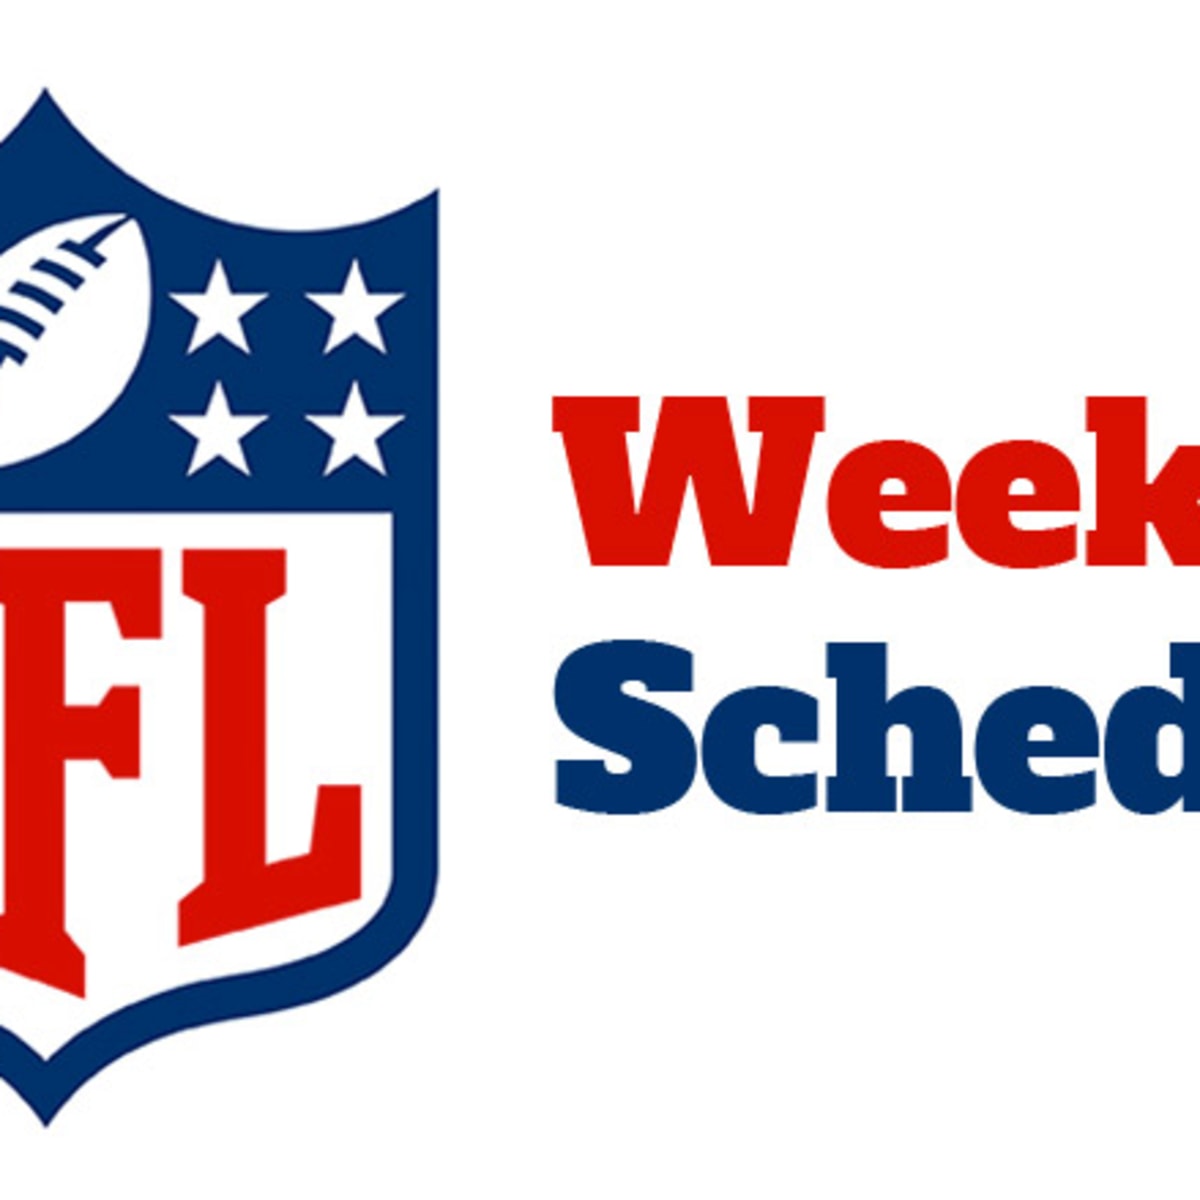 NFL Week 11 Schedule 2022 